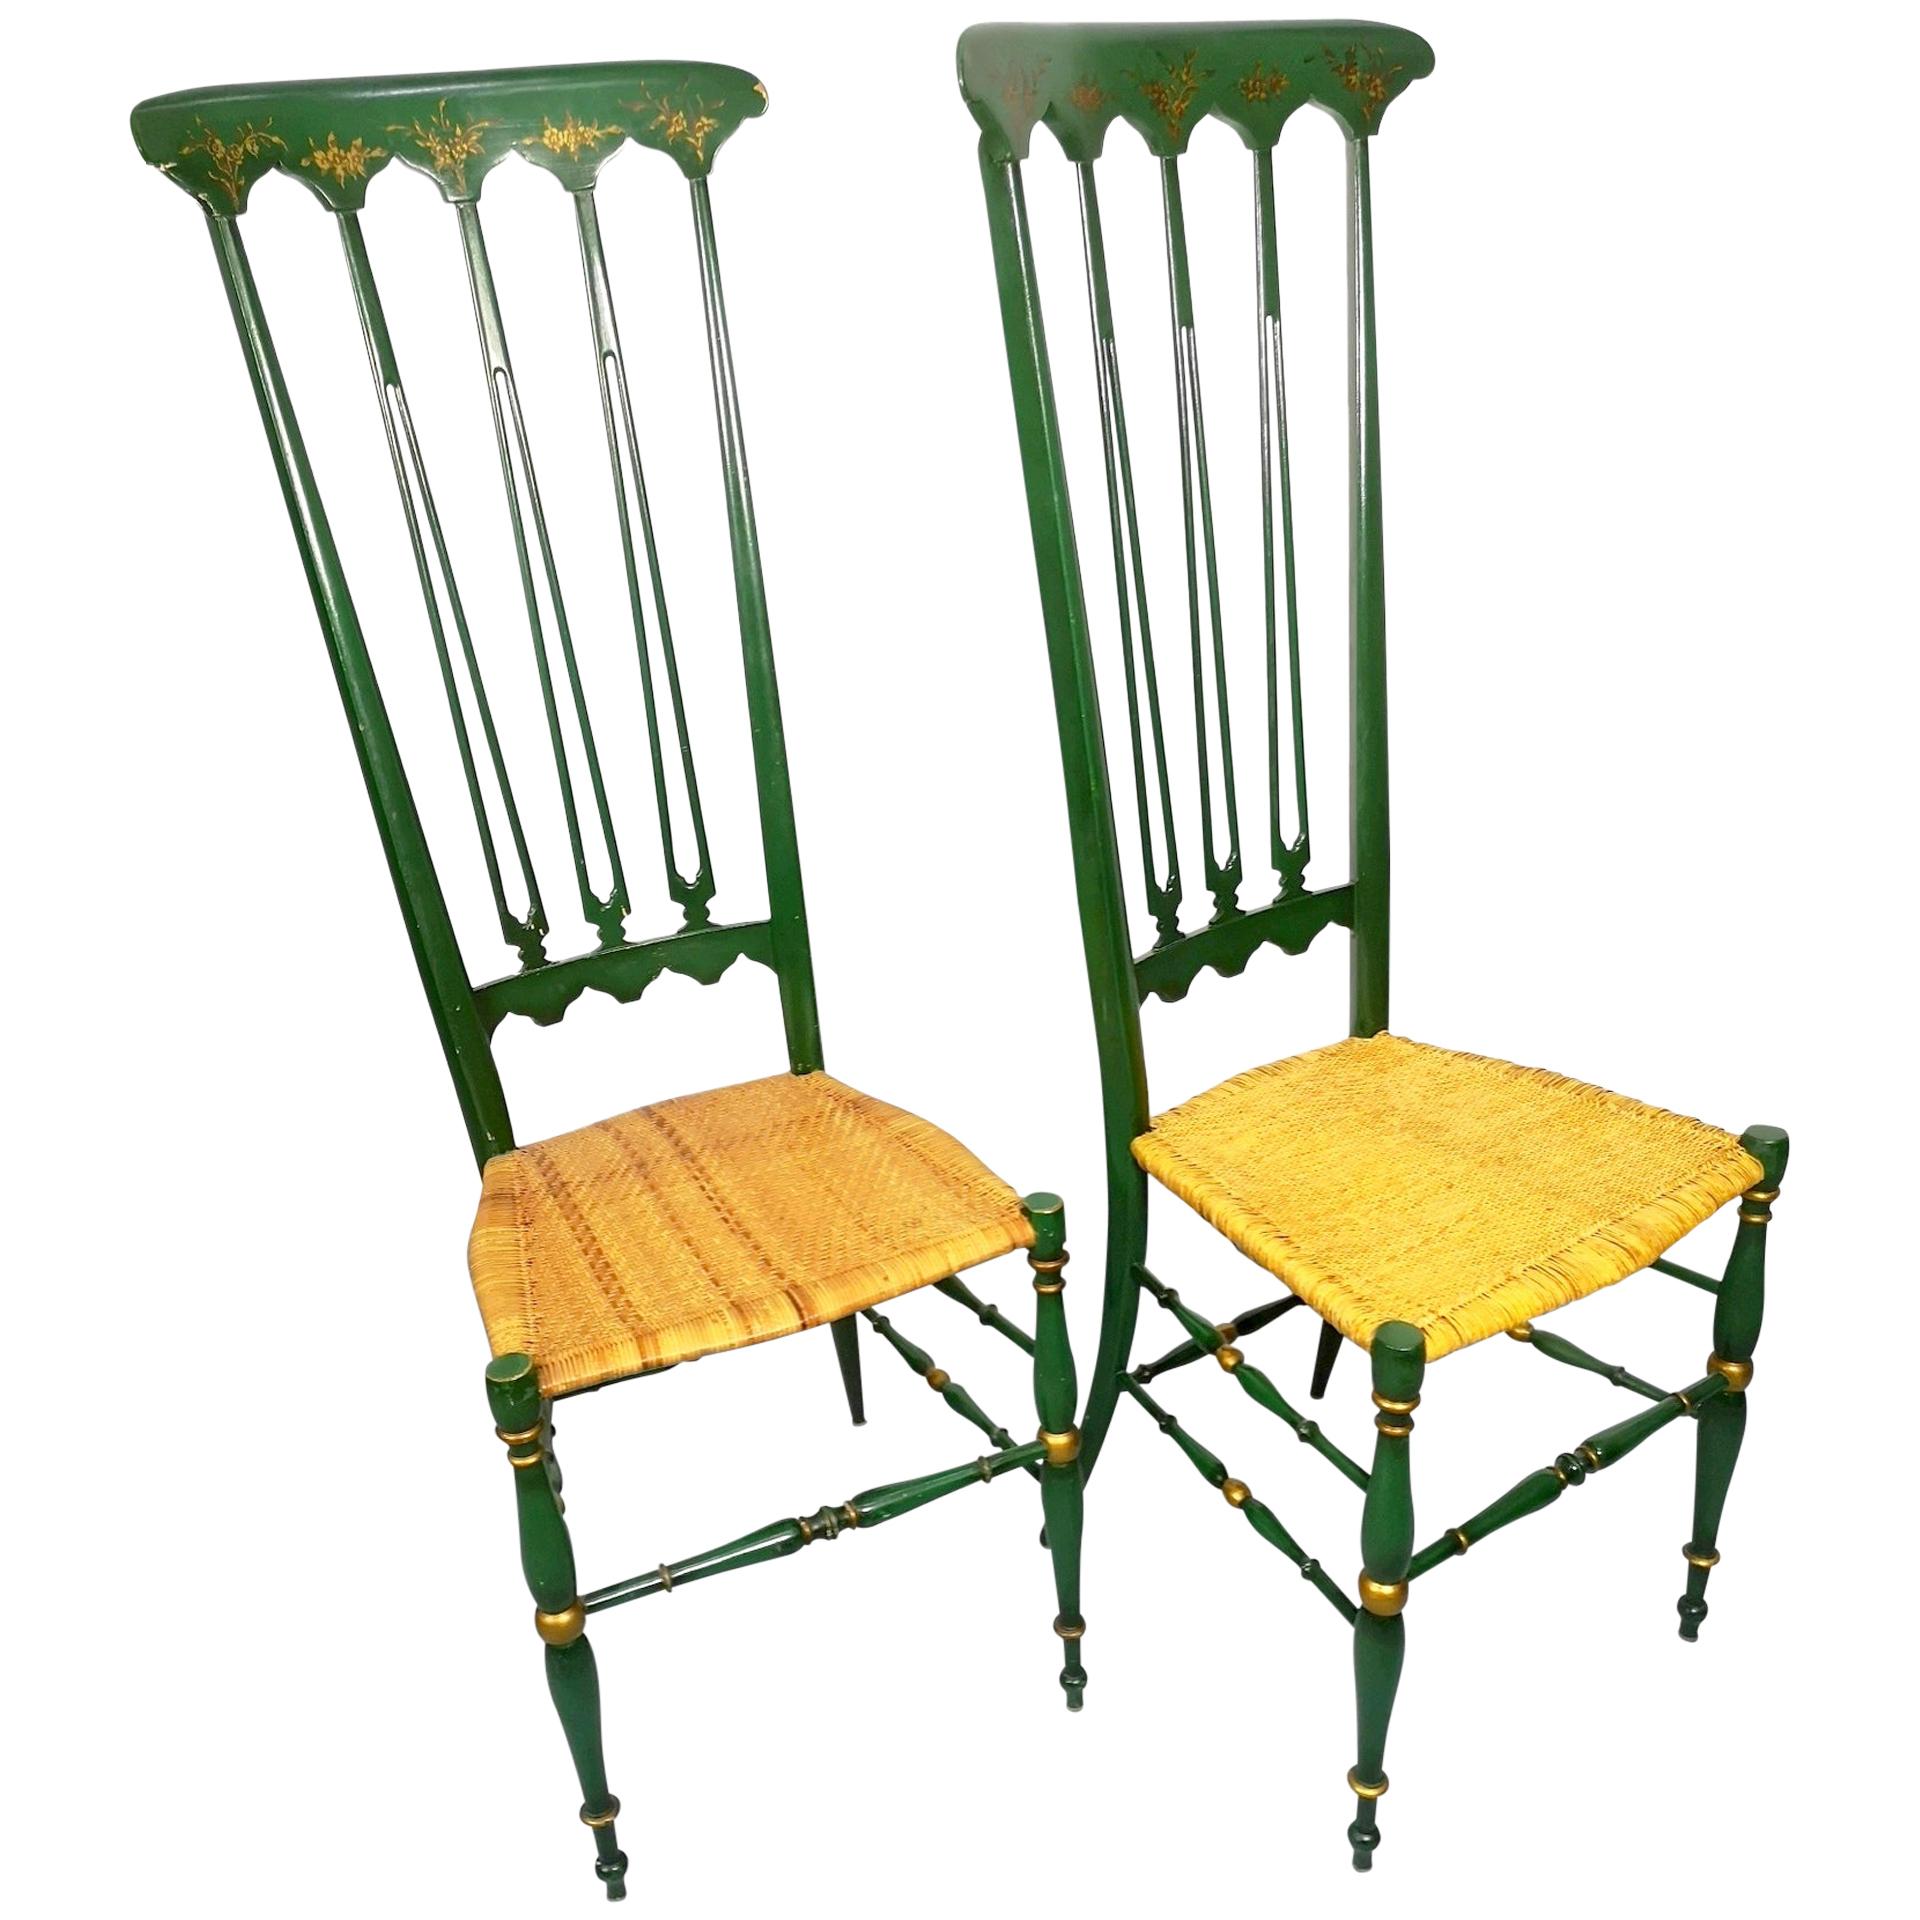 Pair of Chiavari Chairs, 1950s Italian Design, Original Paint and Cane Seats For Sale